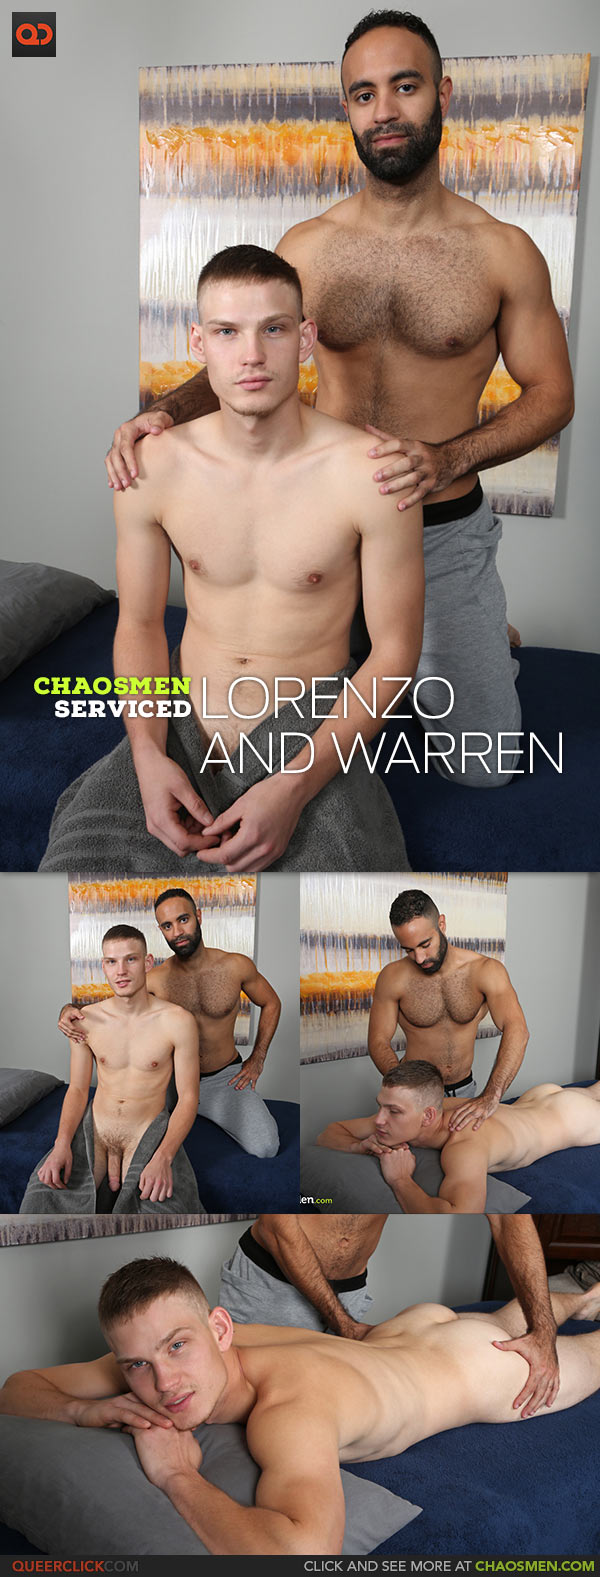 ChaosMen: Lorenzo and Warren - Serviced